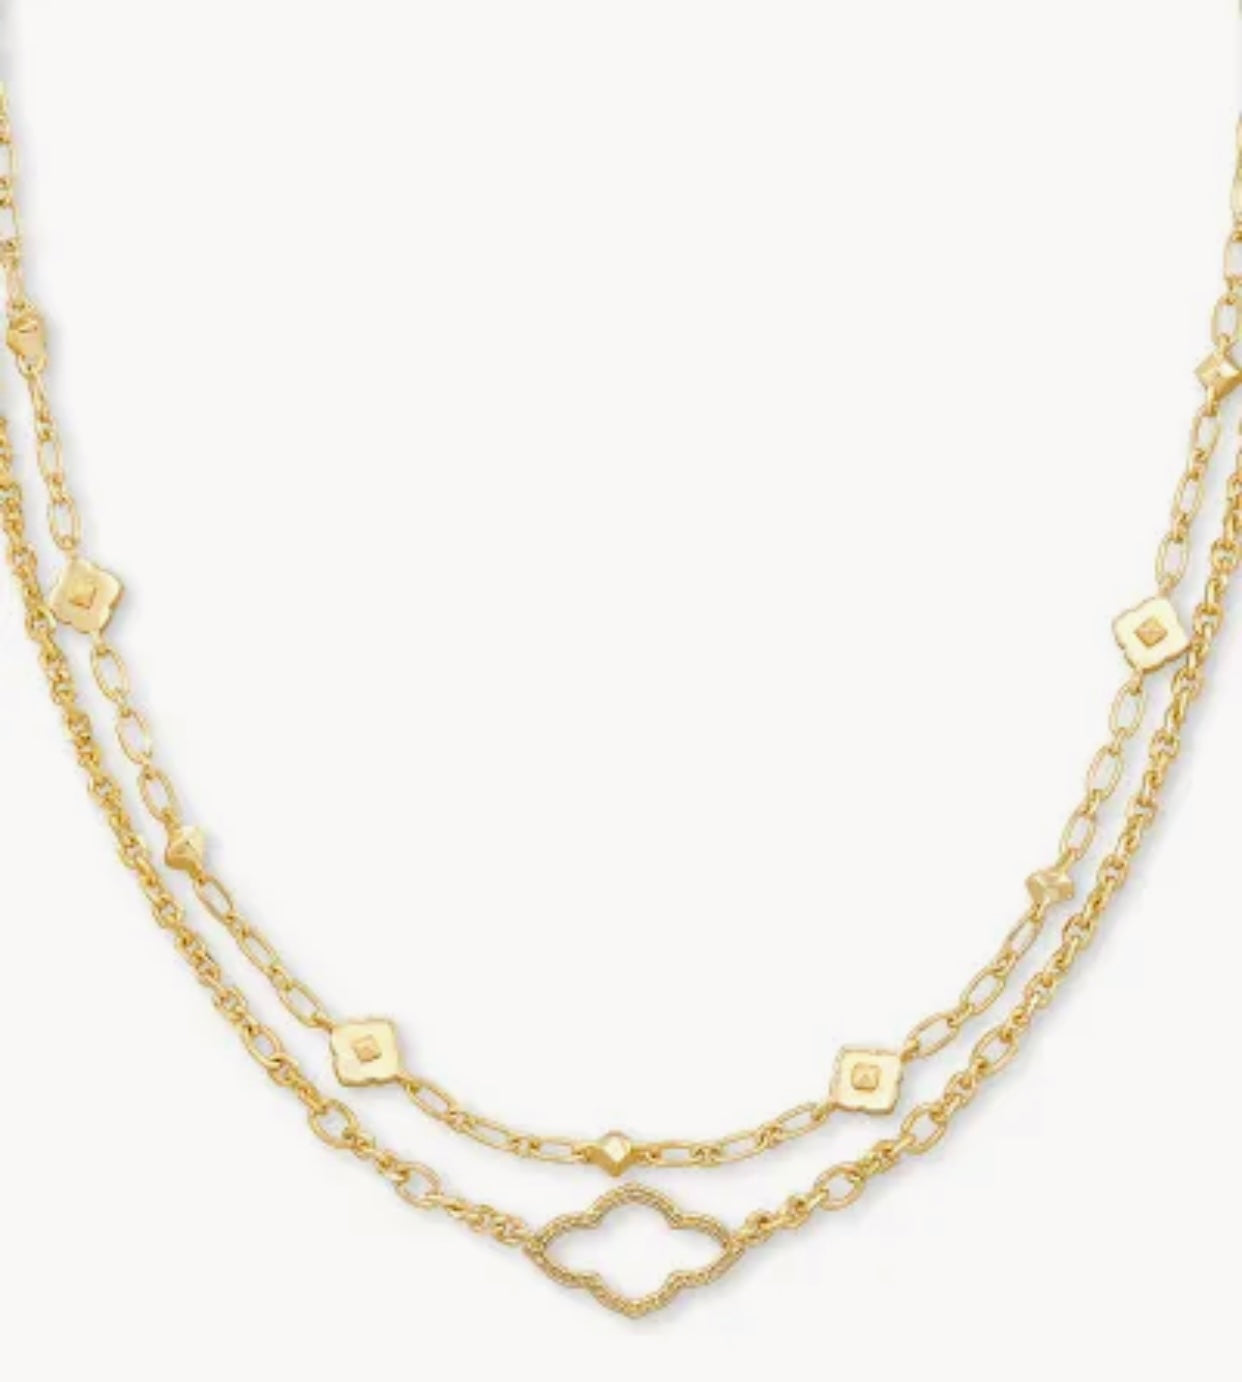 Abbie Multi Strand Gold Necklace